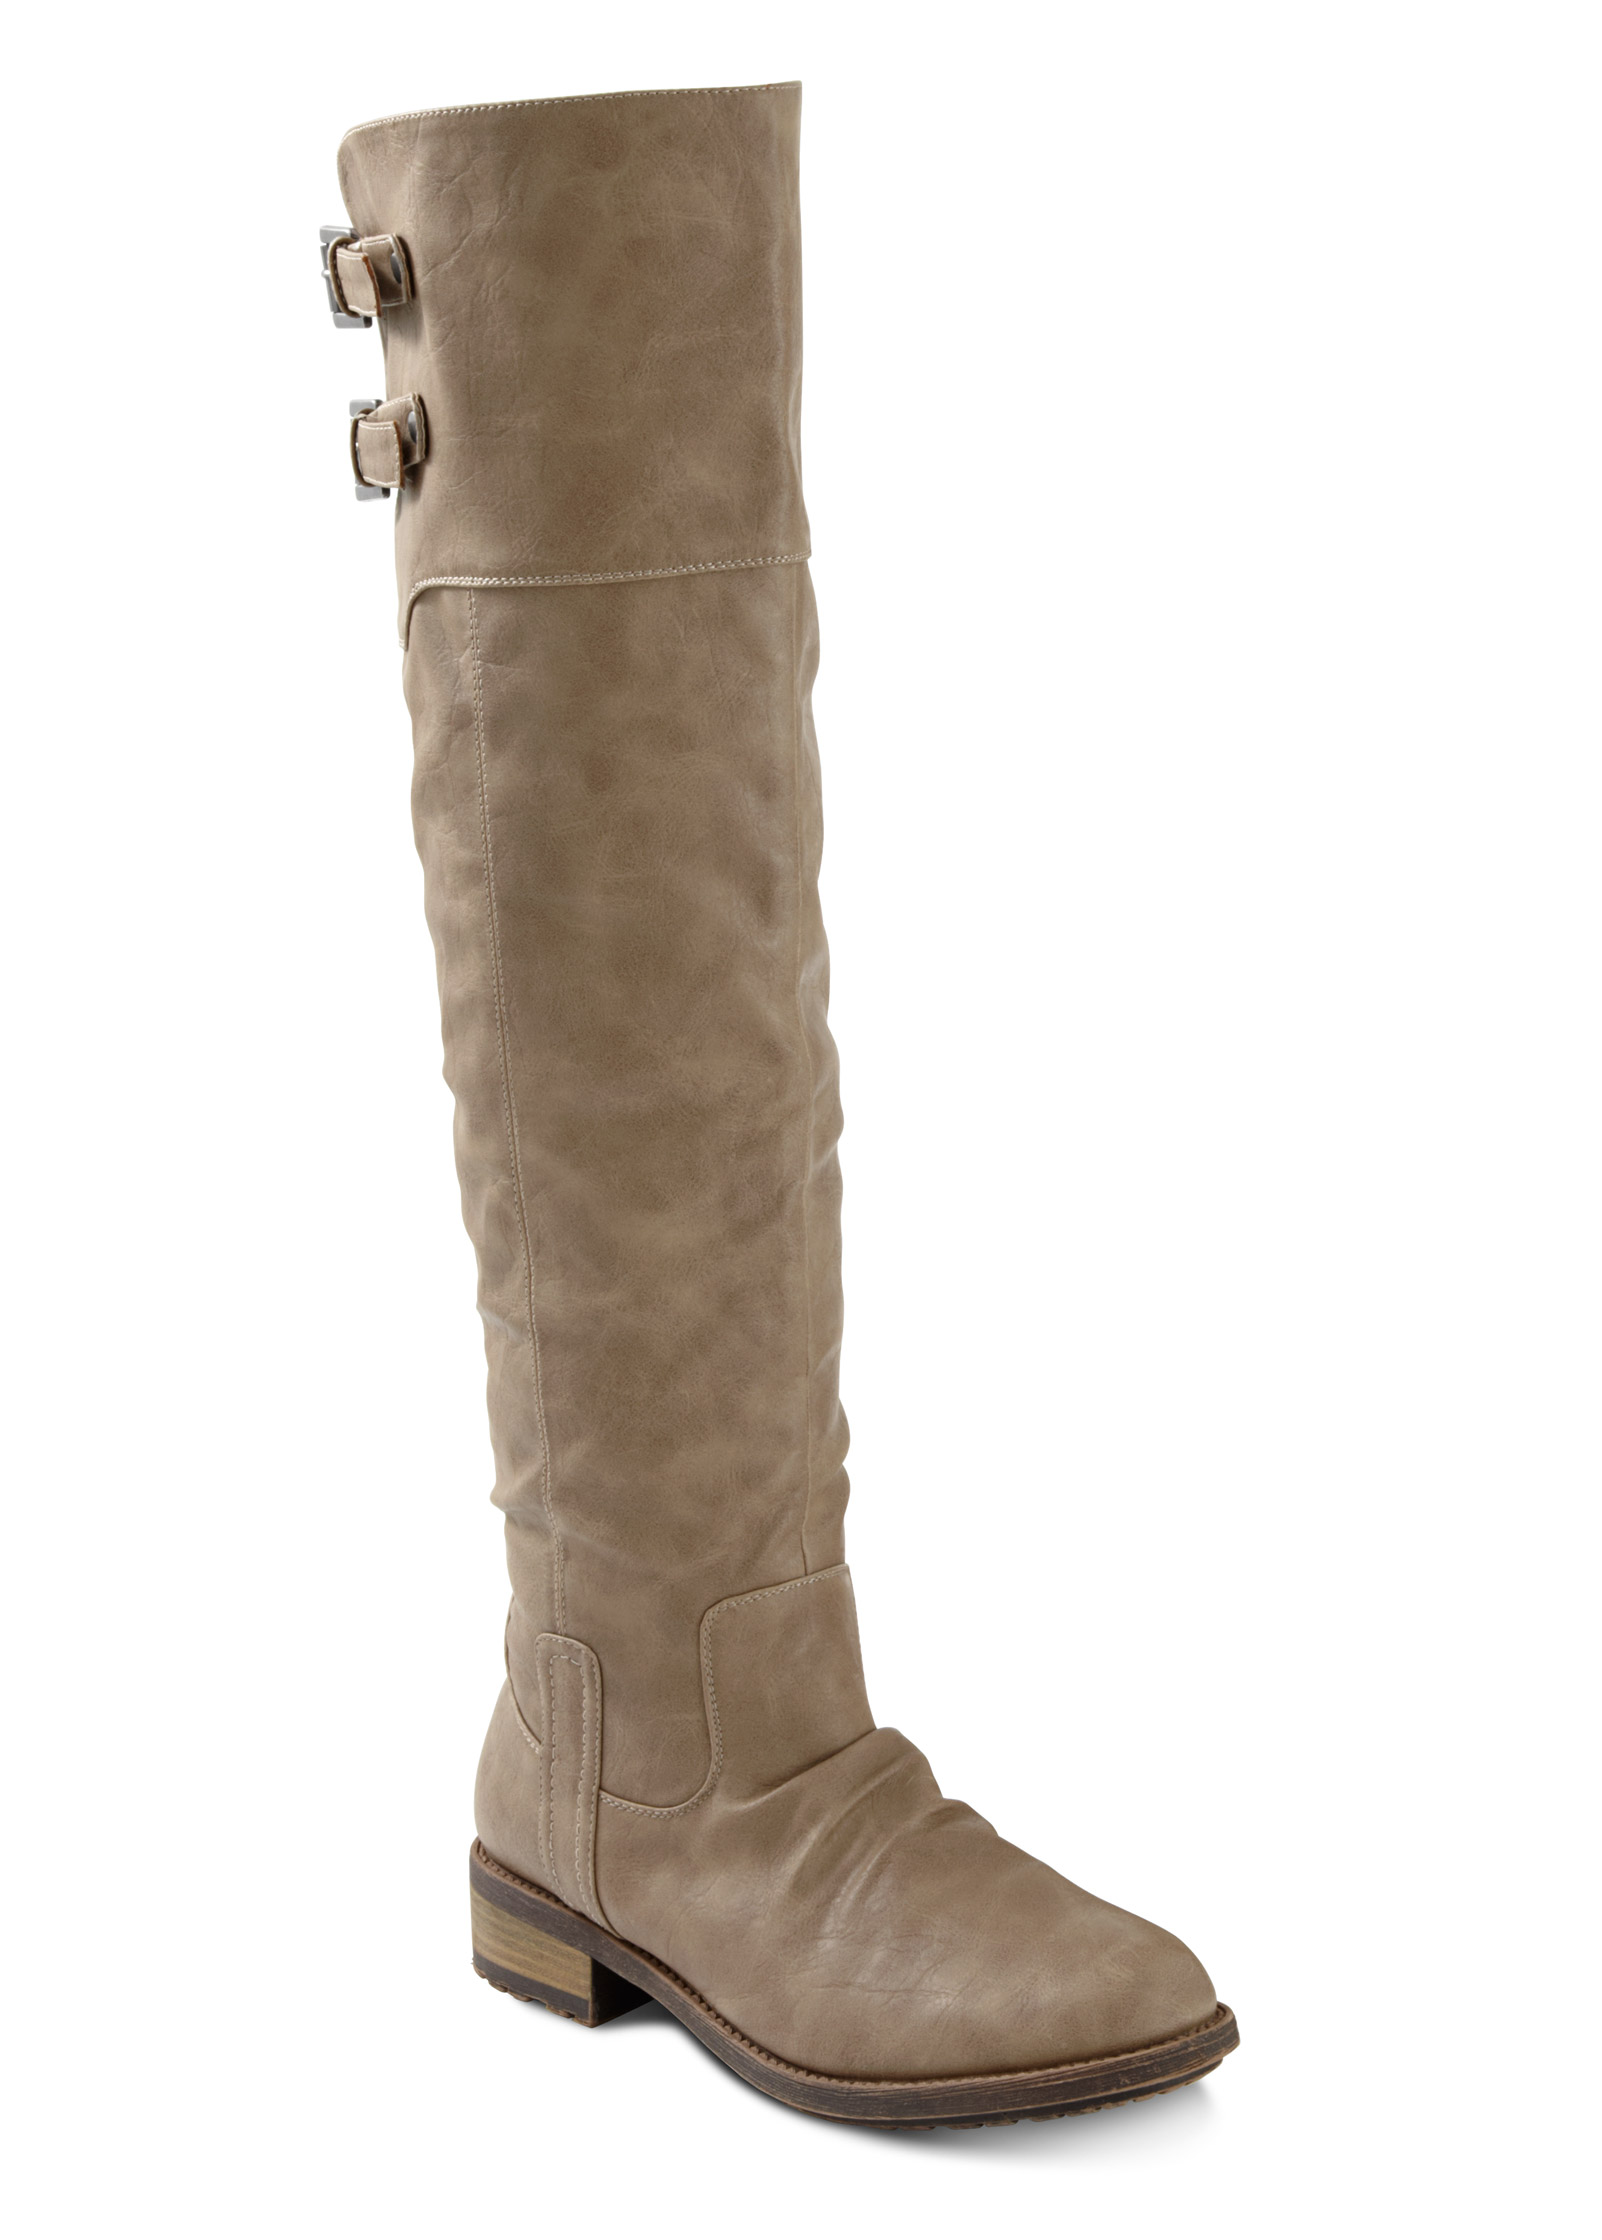 venus women's boots